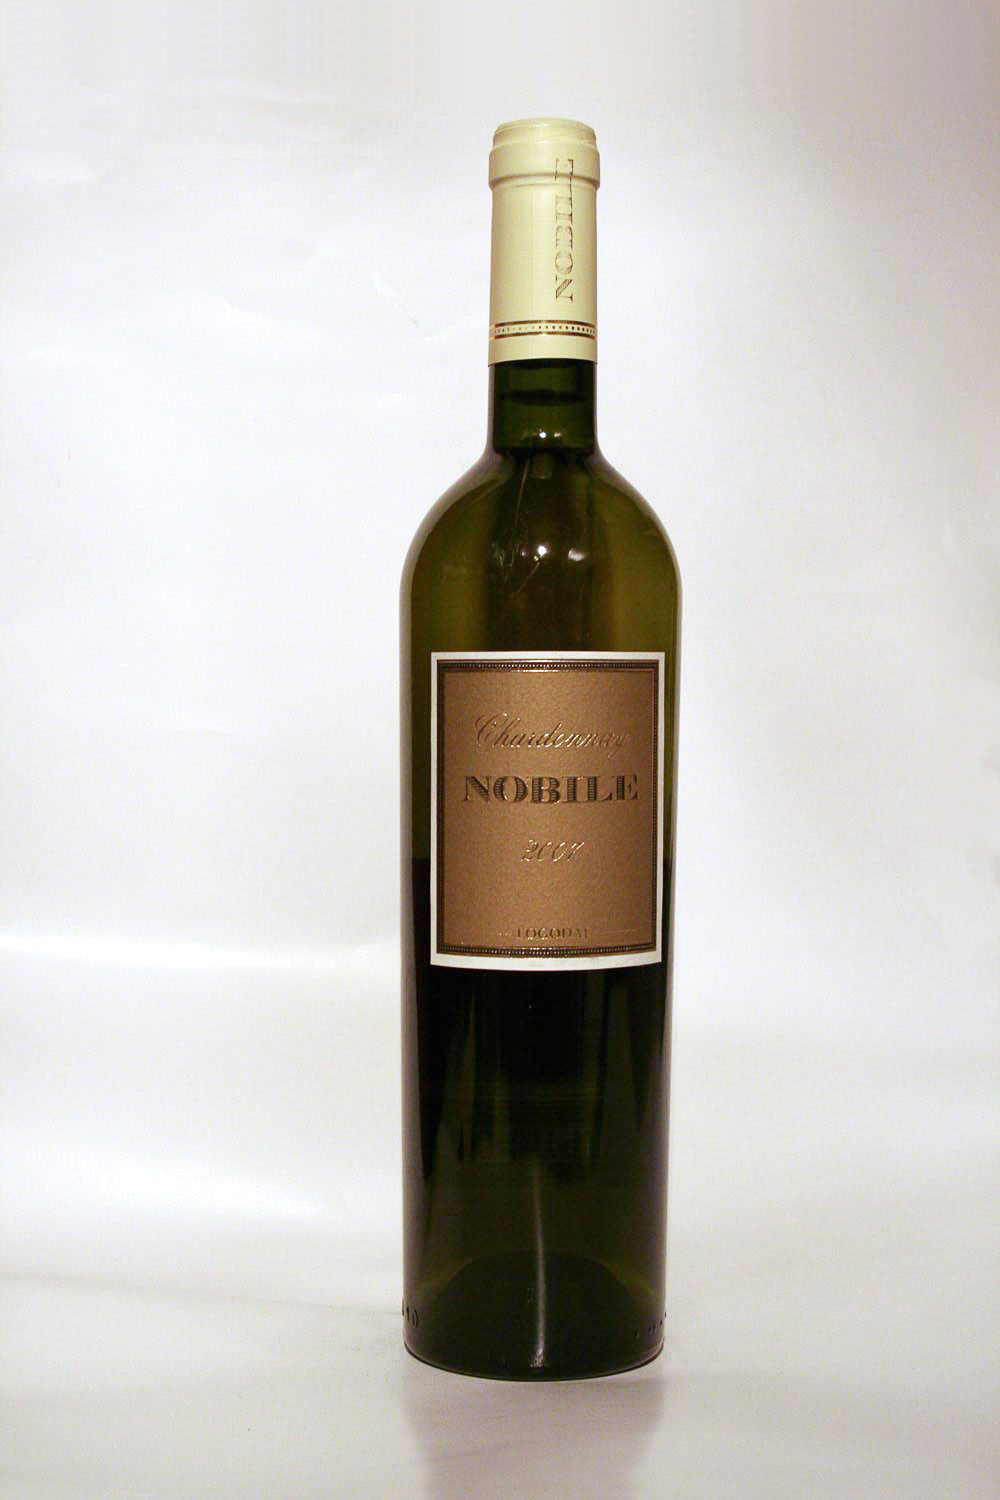 Nobile Shardonnay 2007